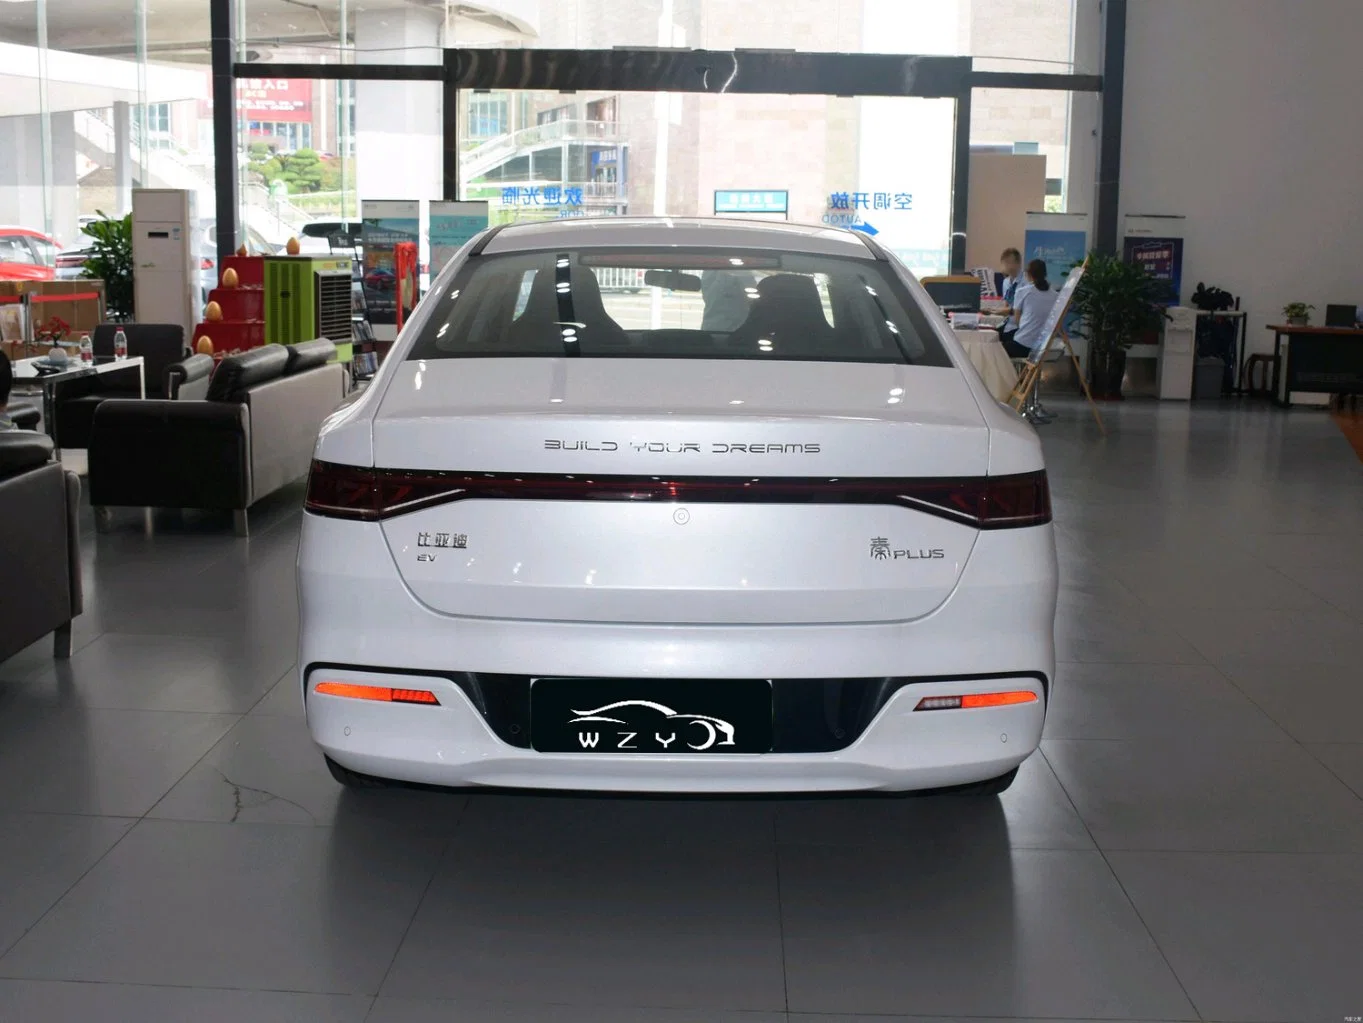 EV Auto Byd Qin Commuting Edition (Taxi/Rent) Qin Plus EV 400L Left Hand Drive High Speed Car